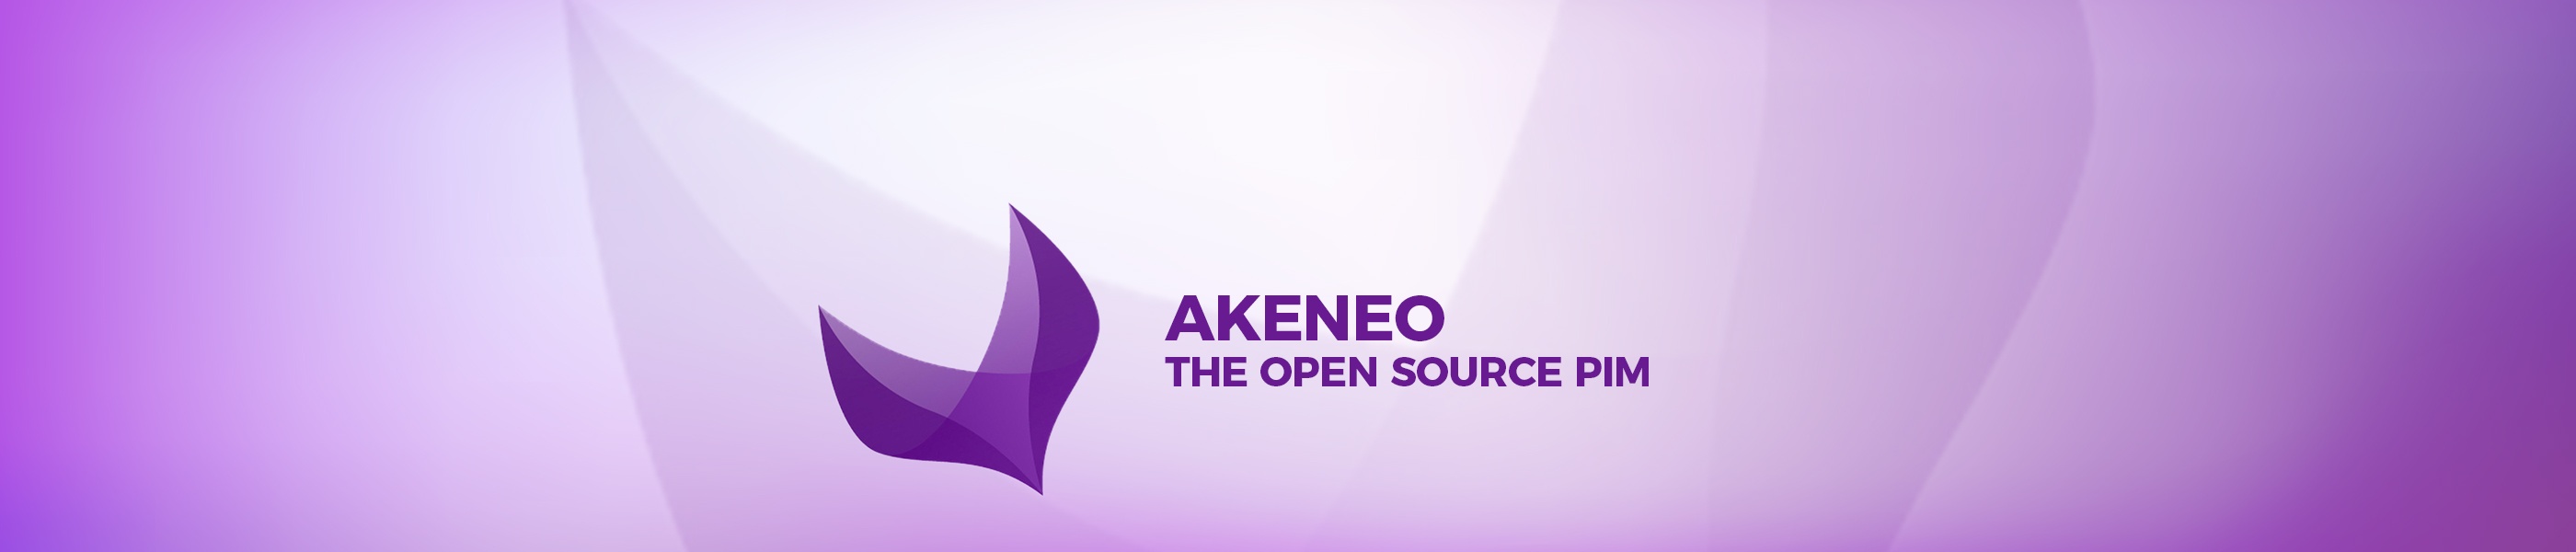 Akeneo PIM -opensource product information management software